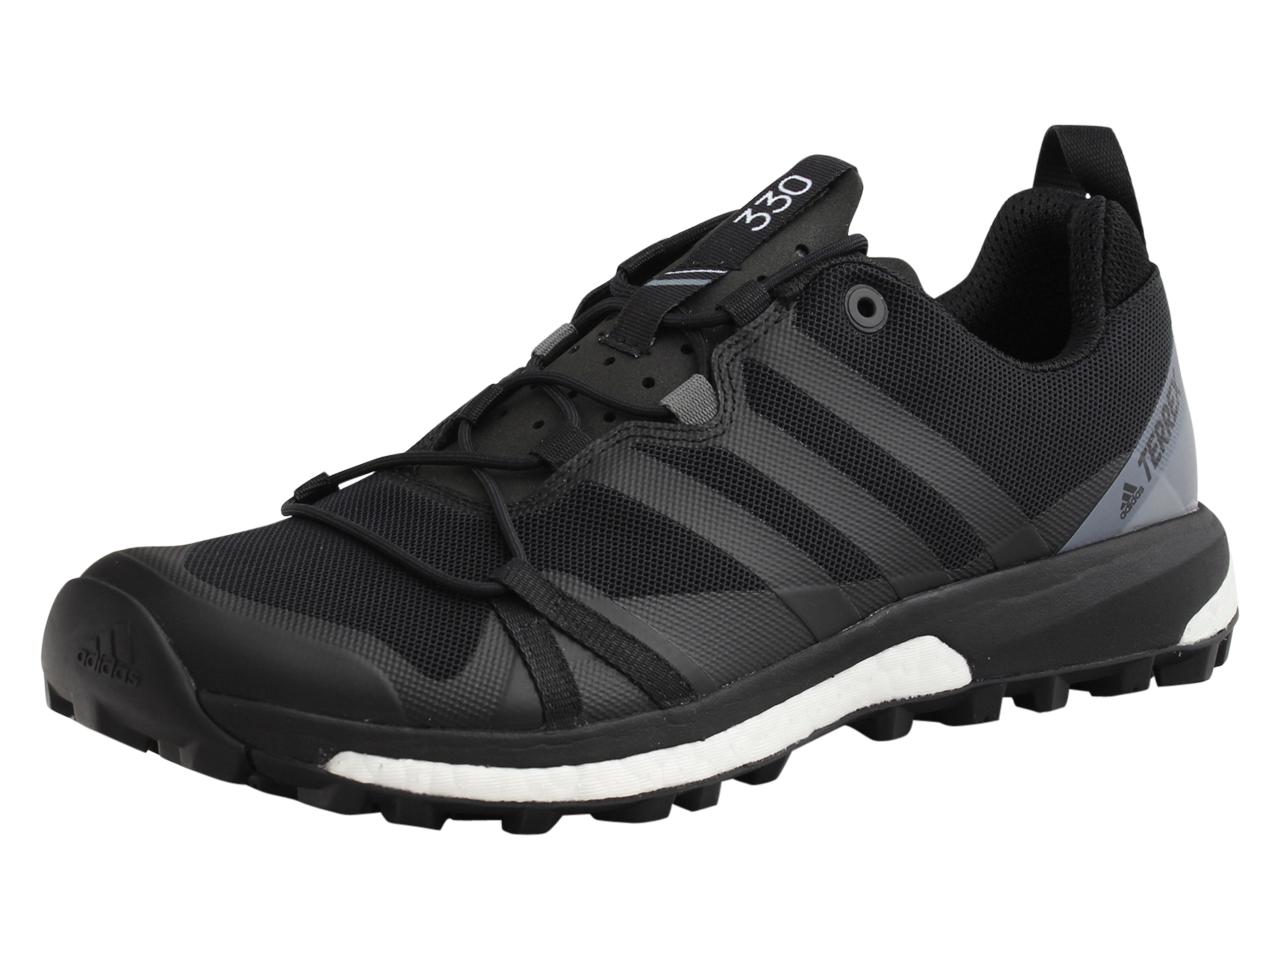 Adidas Men's Terrex Agravic All Terrain Trail Running Sneakers Shoes - Black - 9.5 D(M) US